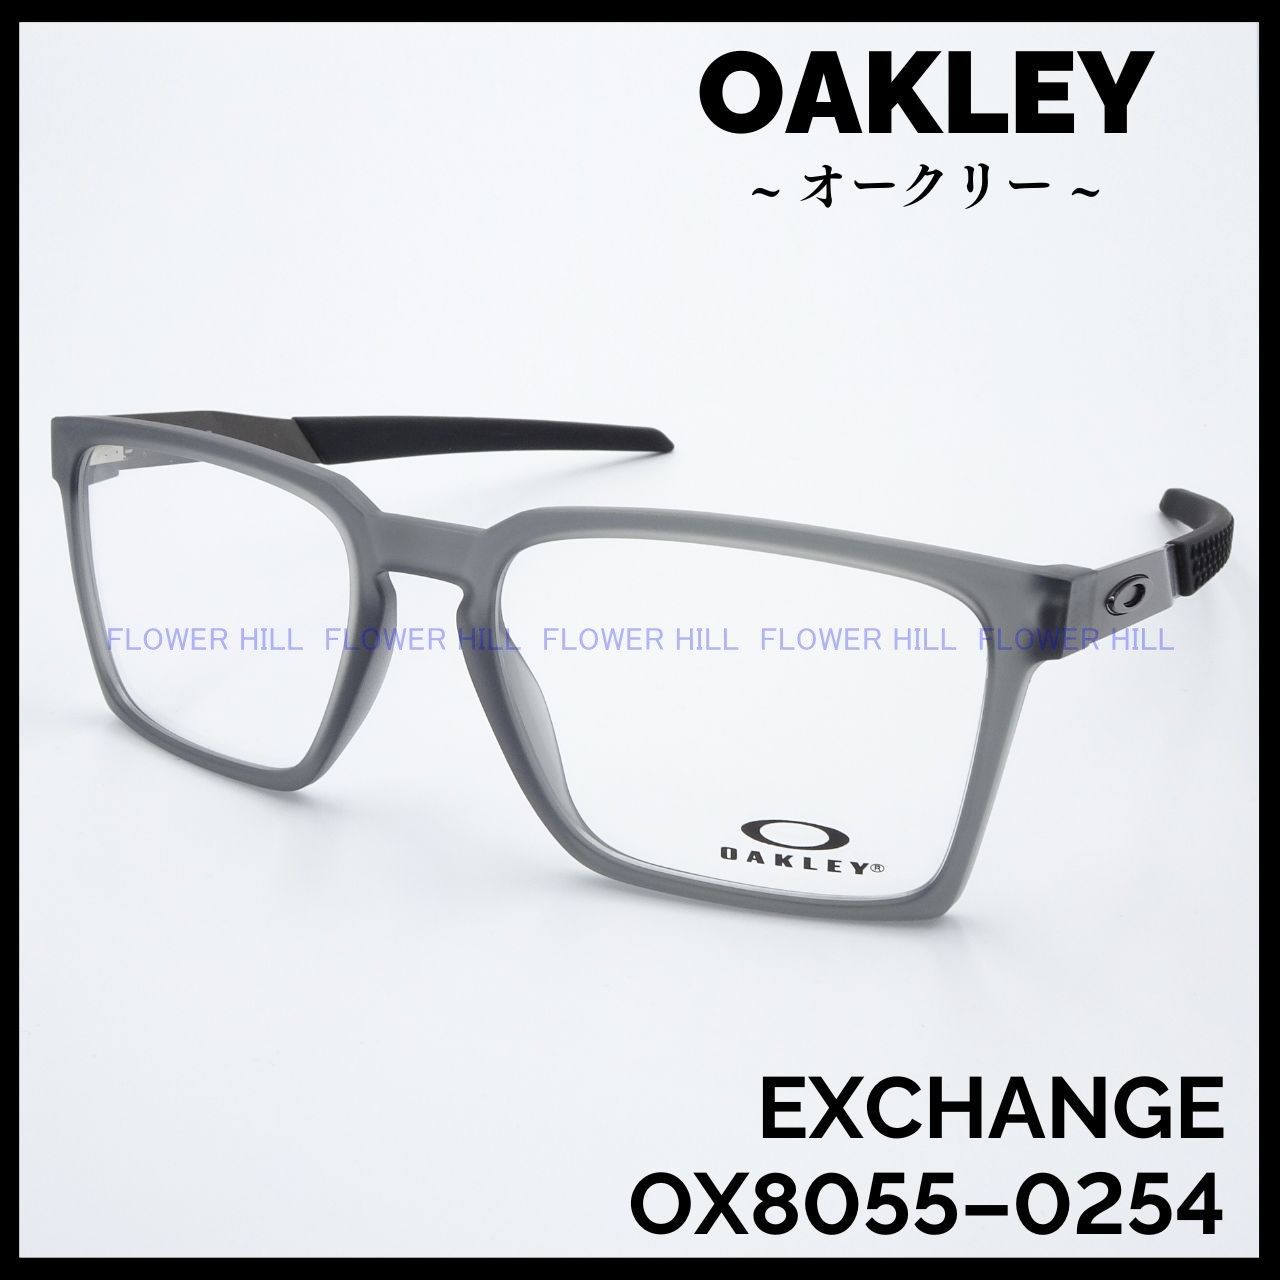 Oakley 正規品 Exchange OX8055 クリア 眼鏡 オークリー正規品